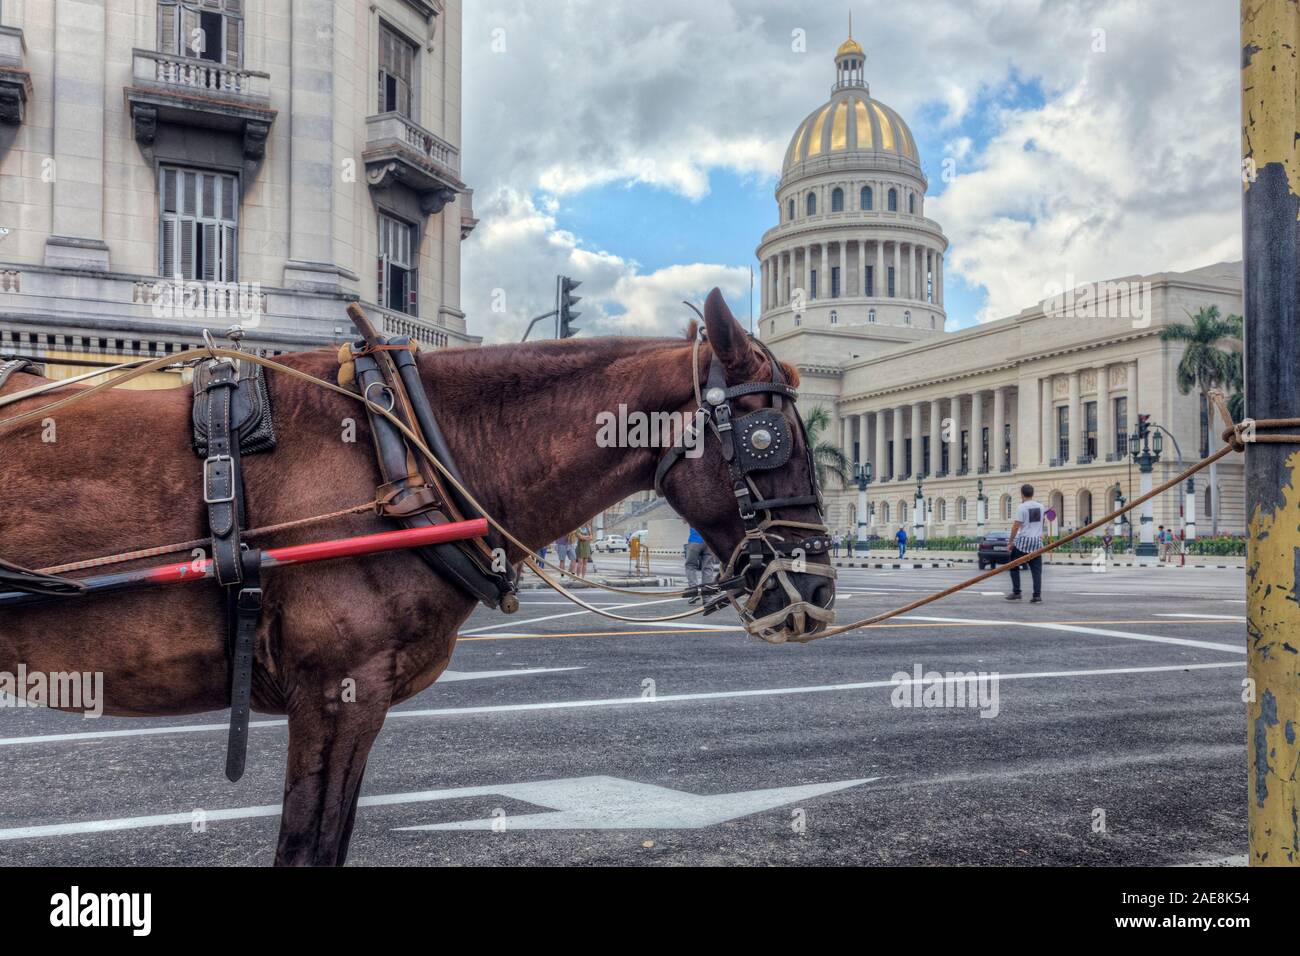 El Capitolio, Havana, Caribbean, Cuba, North America Stock Photo